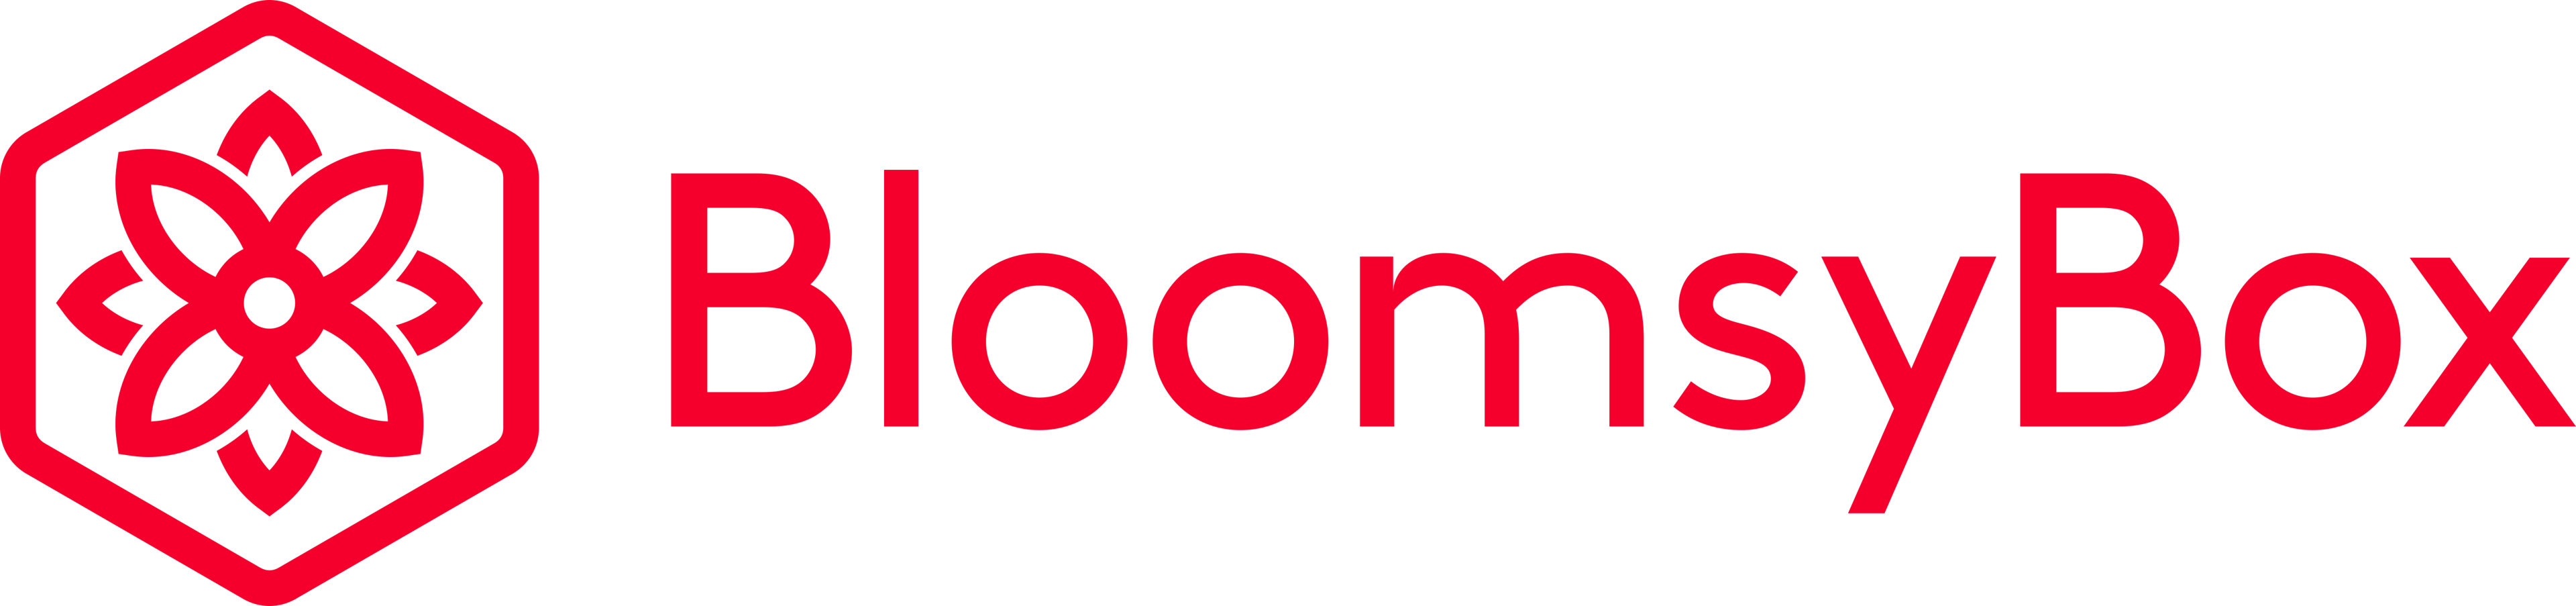 BloomsyBox Help Center logo